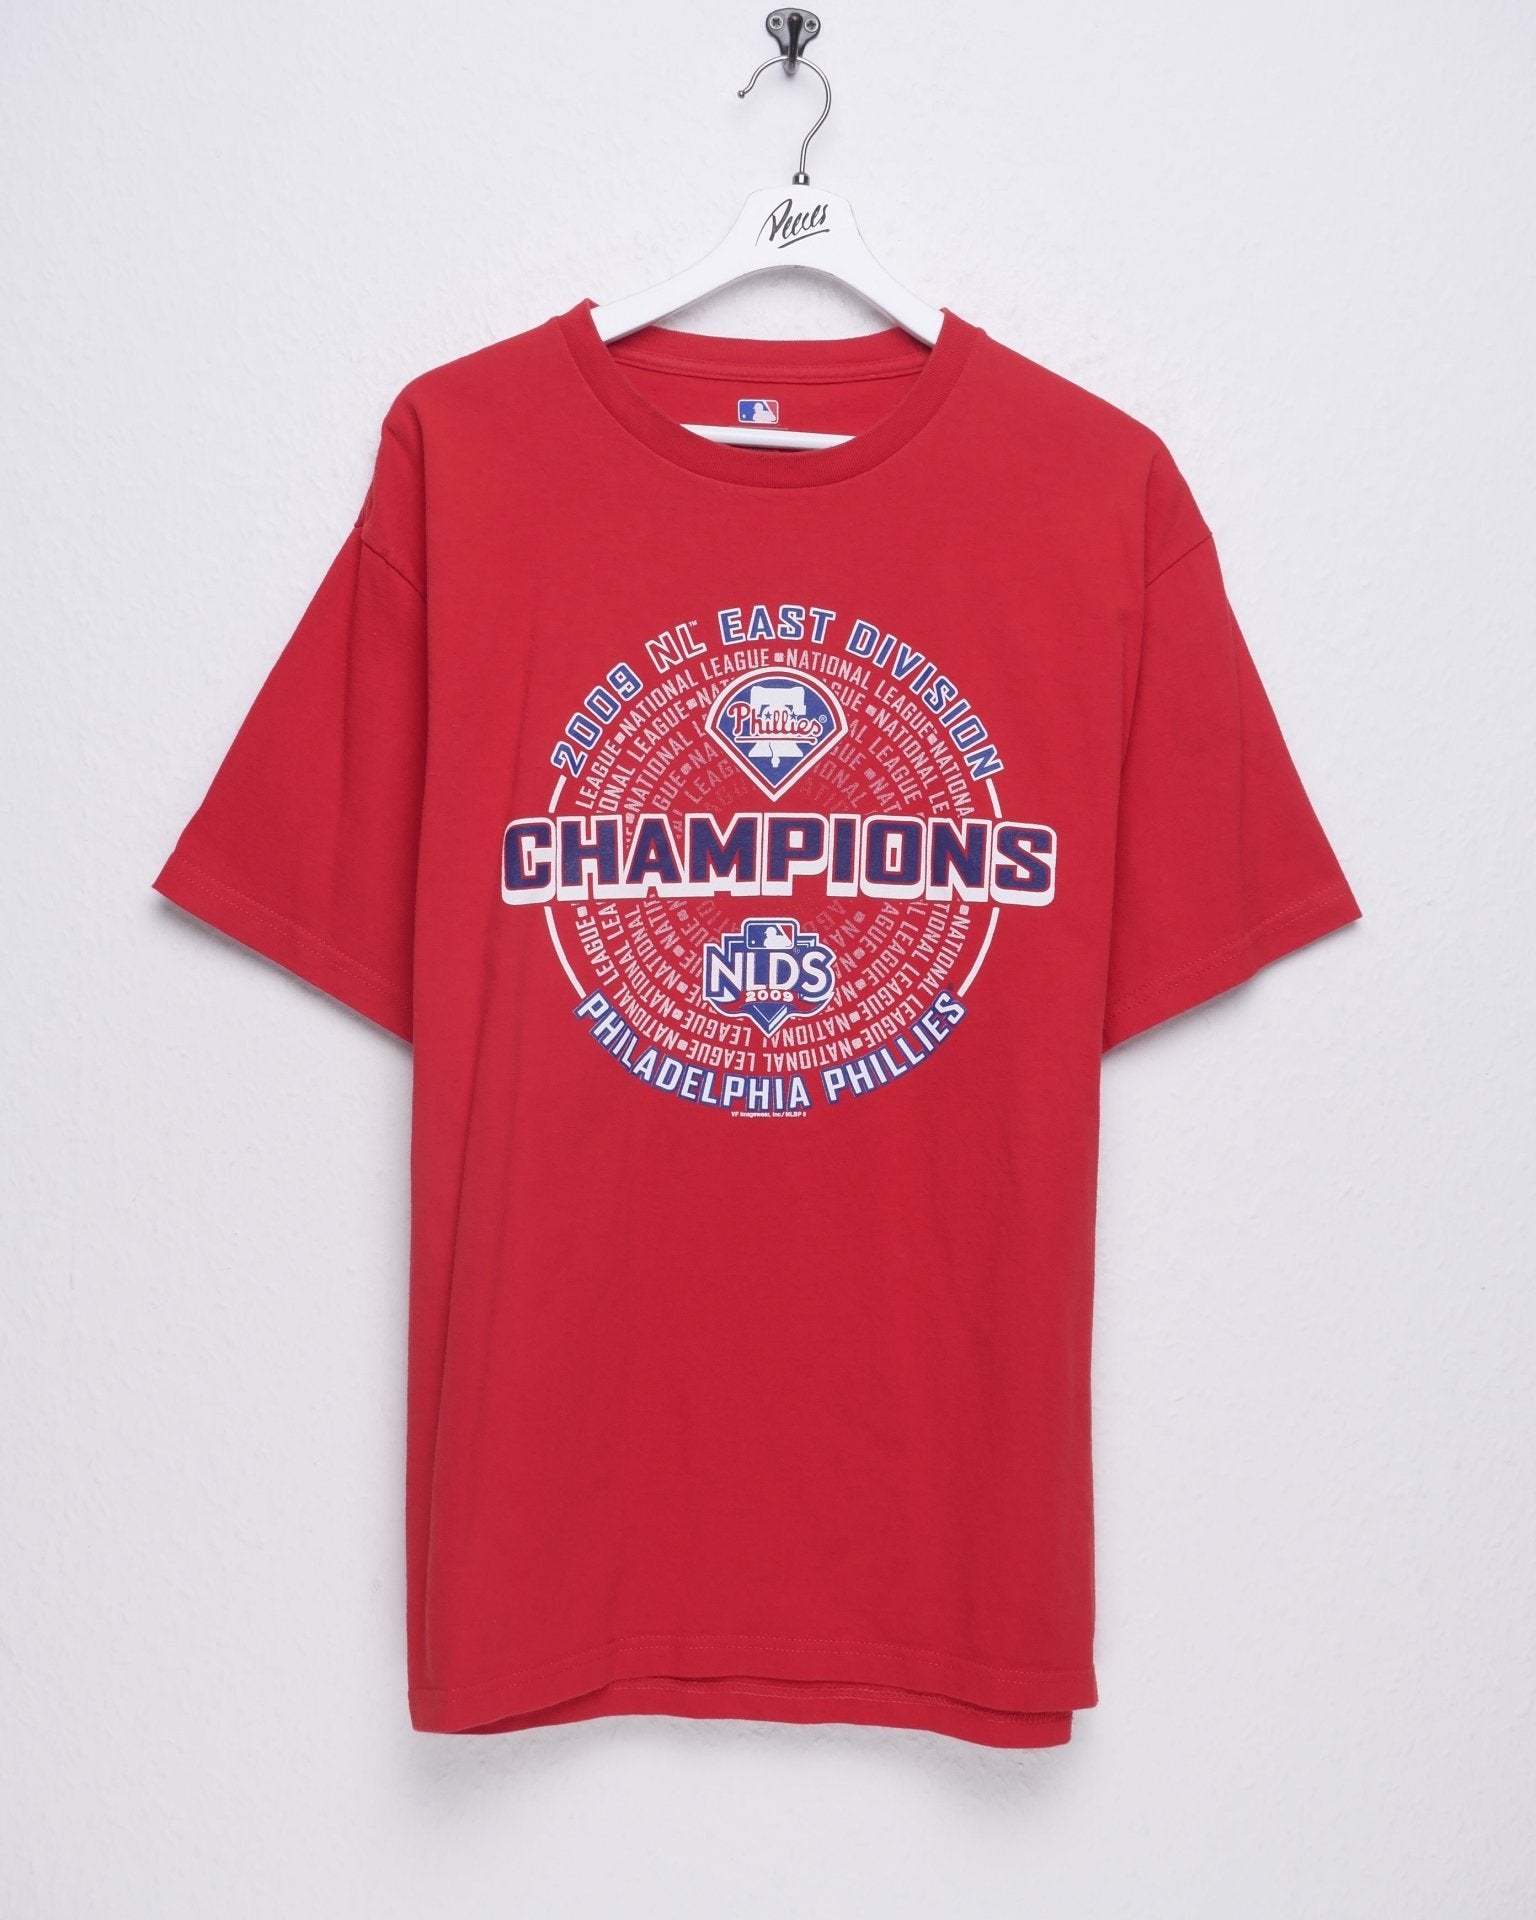 MLB printed Champions Graphic Vintage Shirt - Peeces